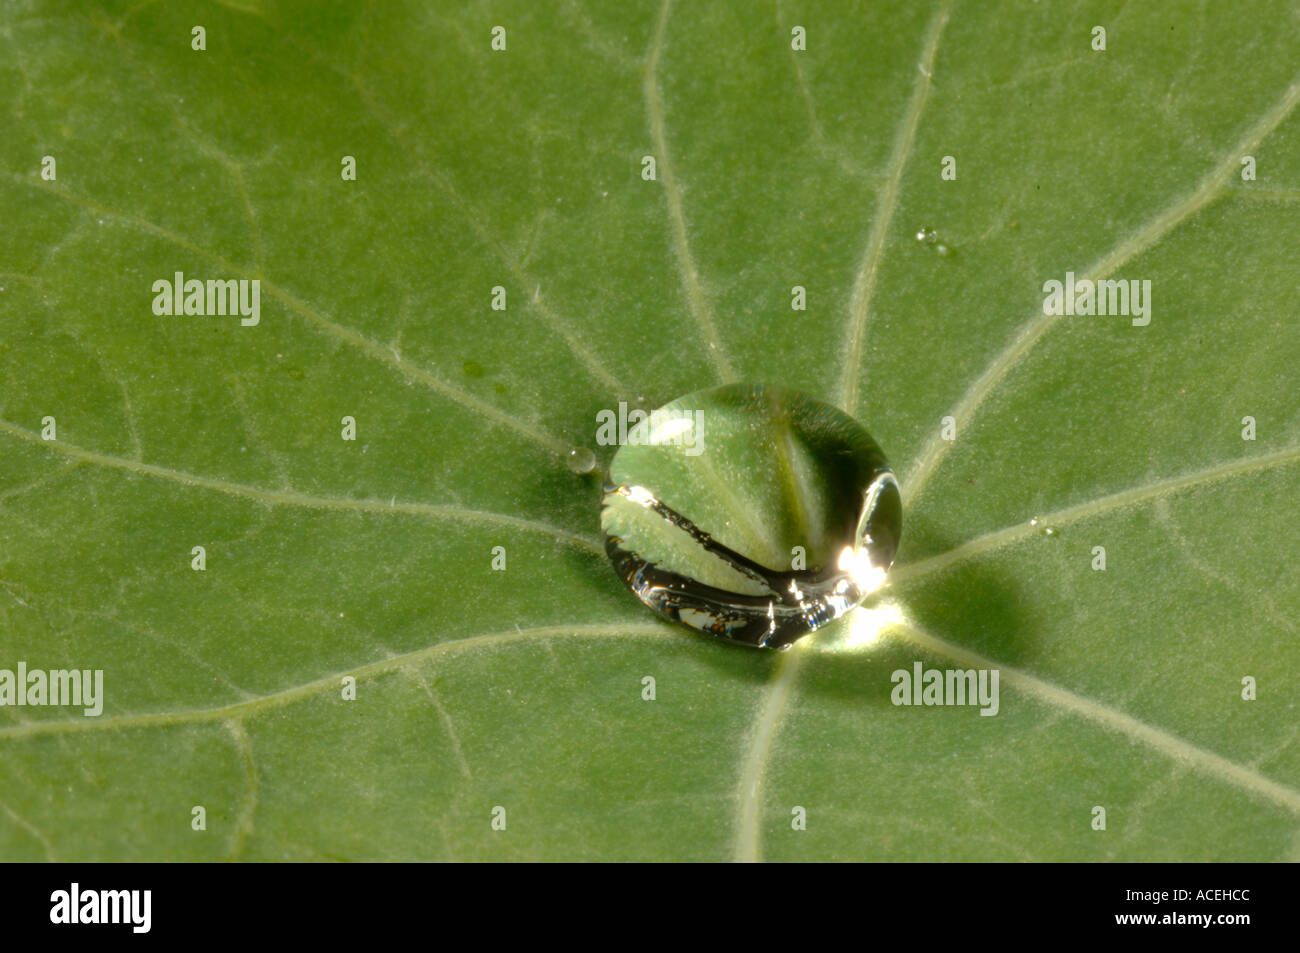 Exudation droplet on a nasturtium leaf Tropaeolum majus Stock Photo